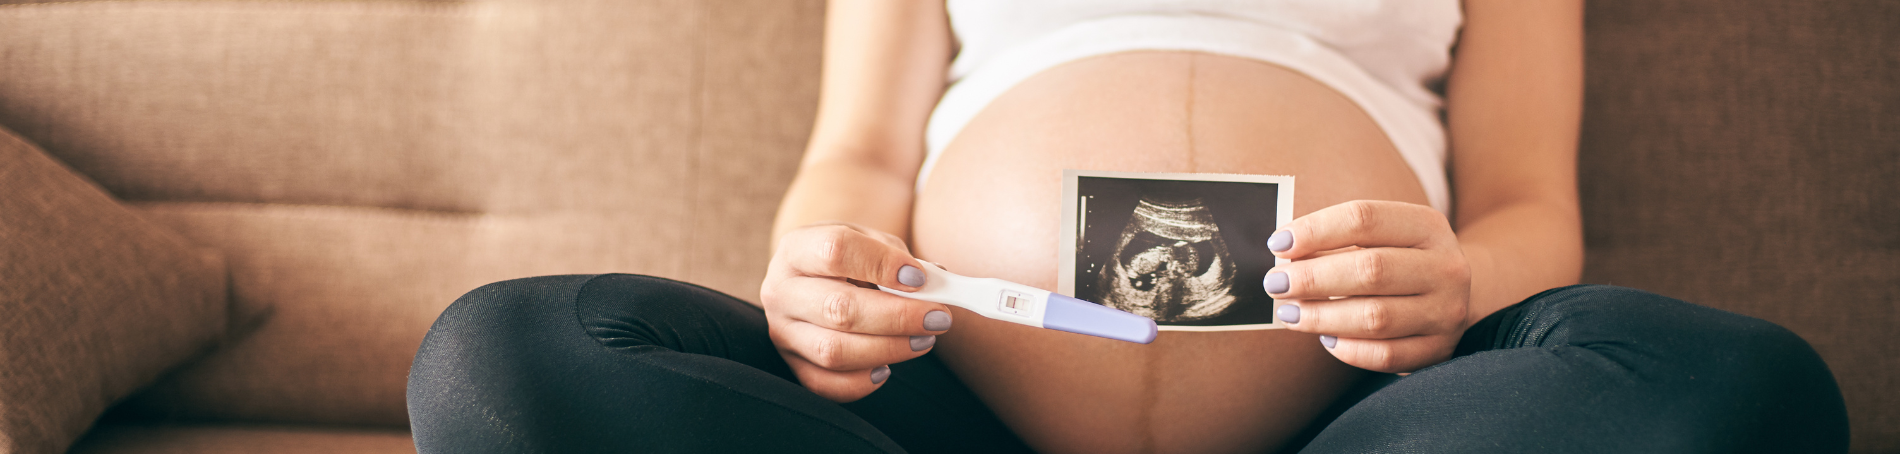 Vrouw zwangerschapstest en echo foto